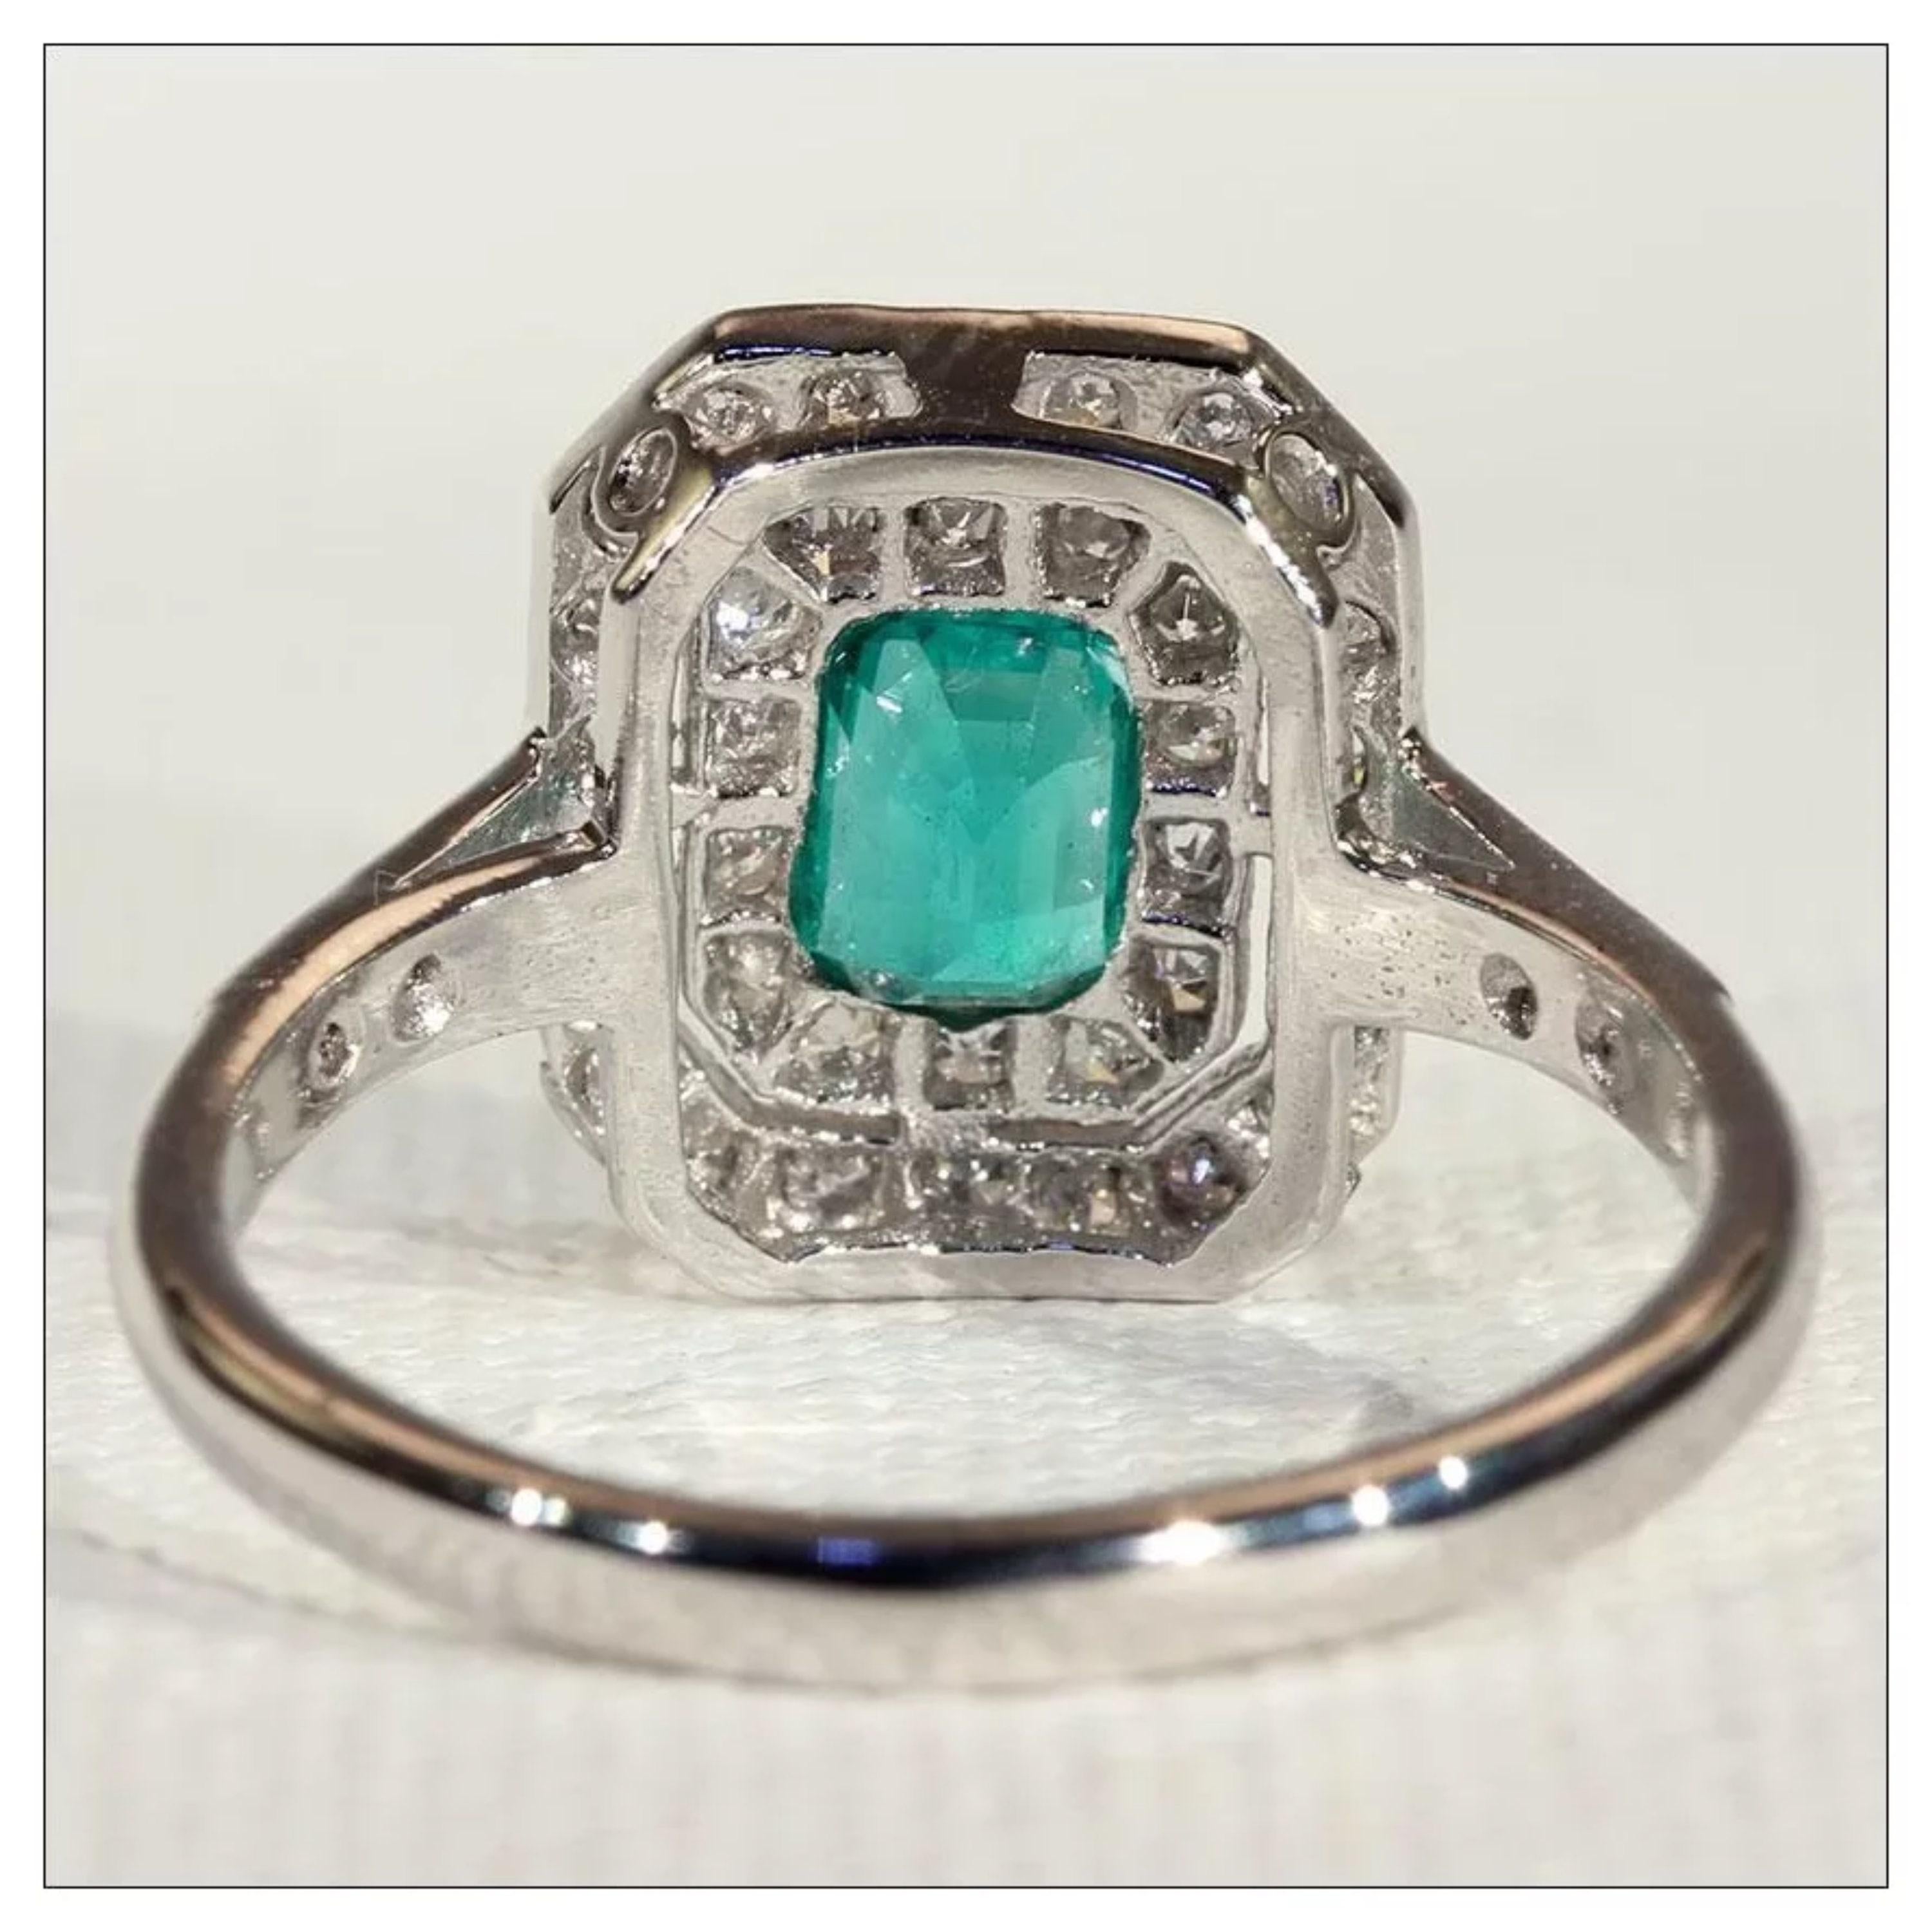 For Sale:  2 Carat Emerald Cut Emerald Diamond Engagement Ring, Halo Emerald Diamond Ring 3